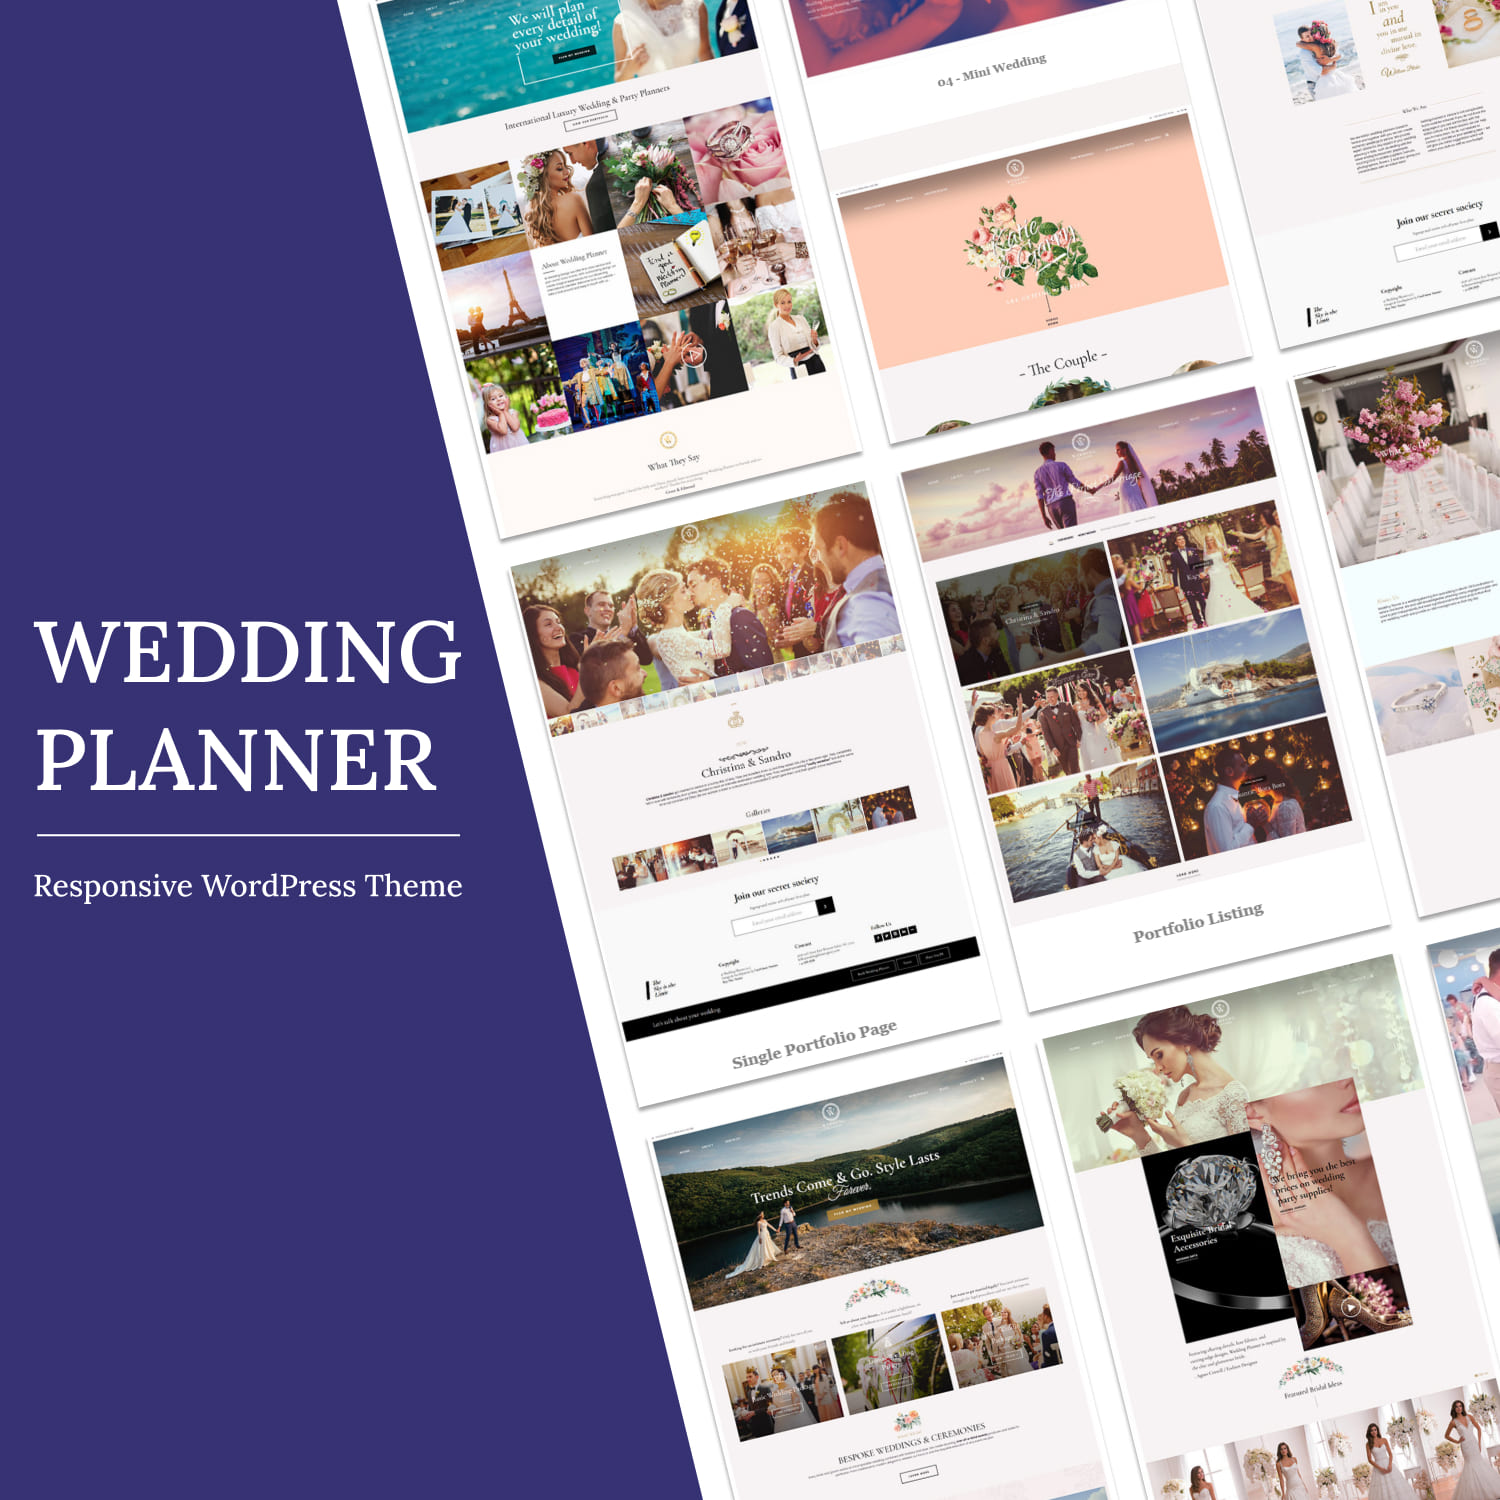 Trends on the Wedding Planner - Responsive WordPress Theme.